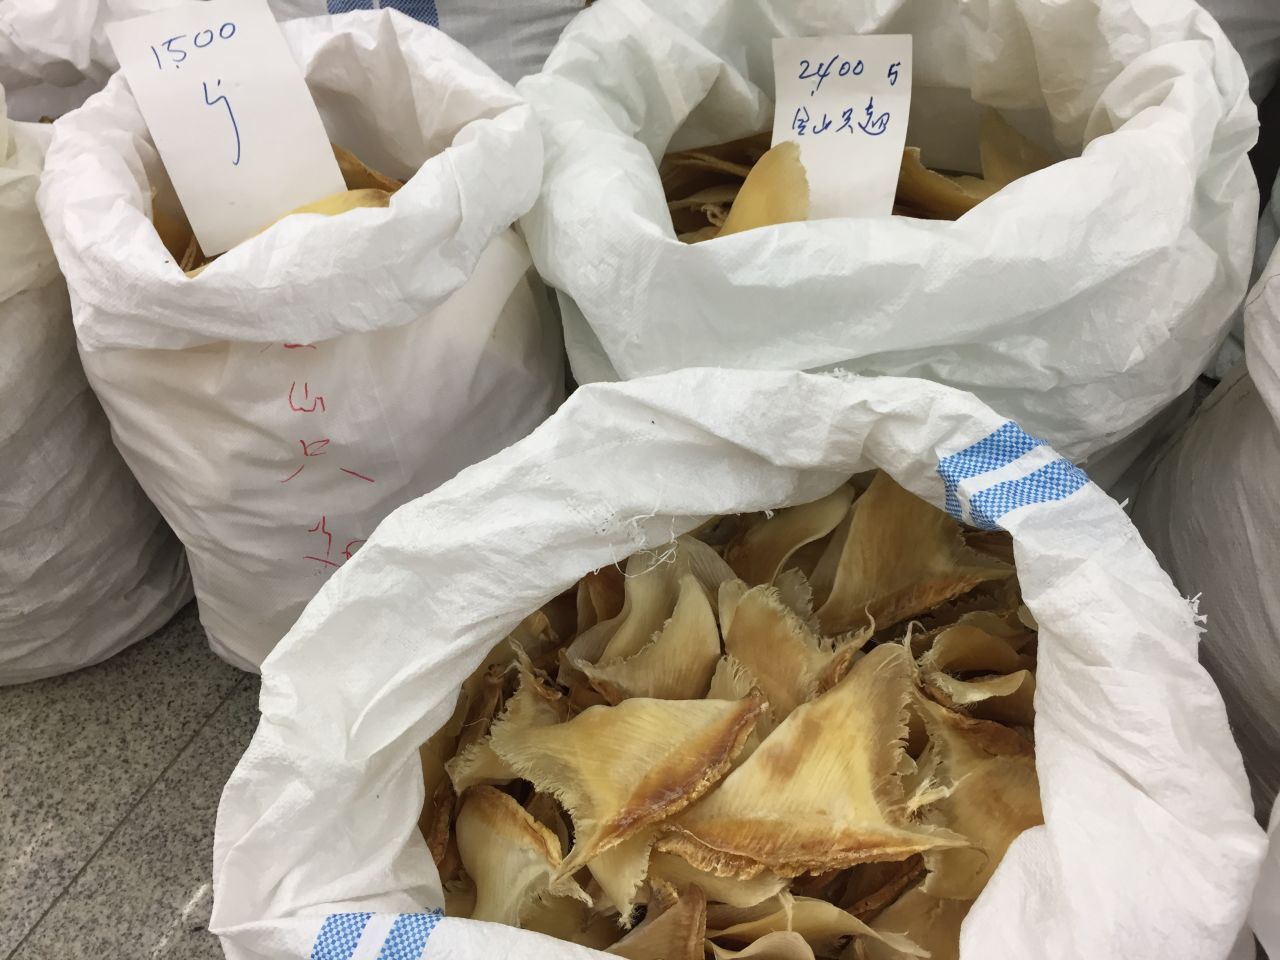 Dried shark fin in bins at Hong Kong's Dried Seafood Market.